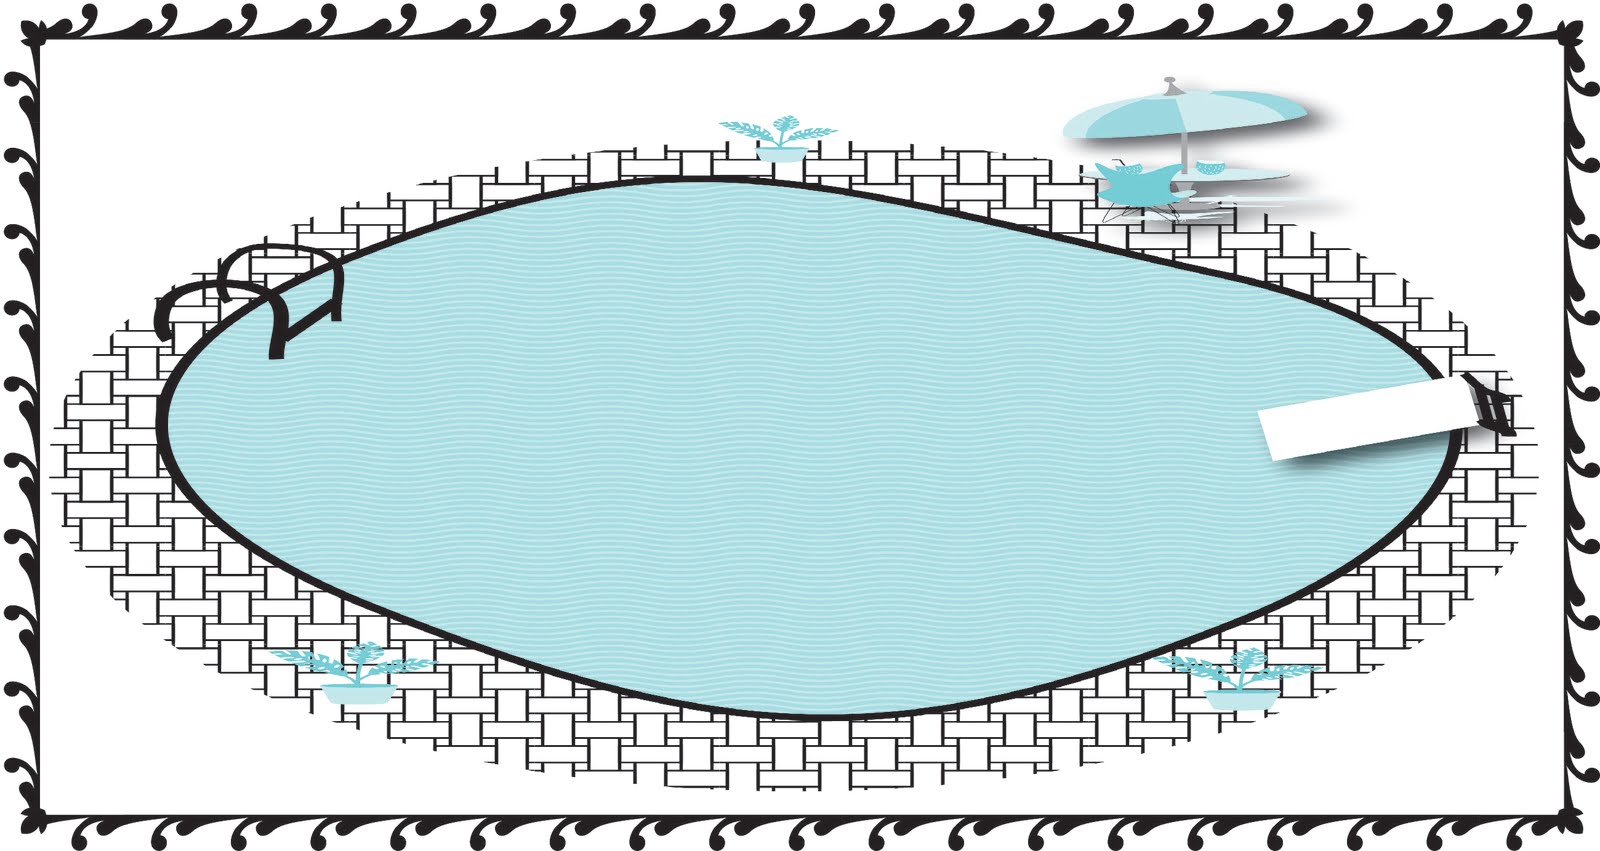 Bullington Designs: pool clip art I designed for a pool company ...